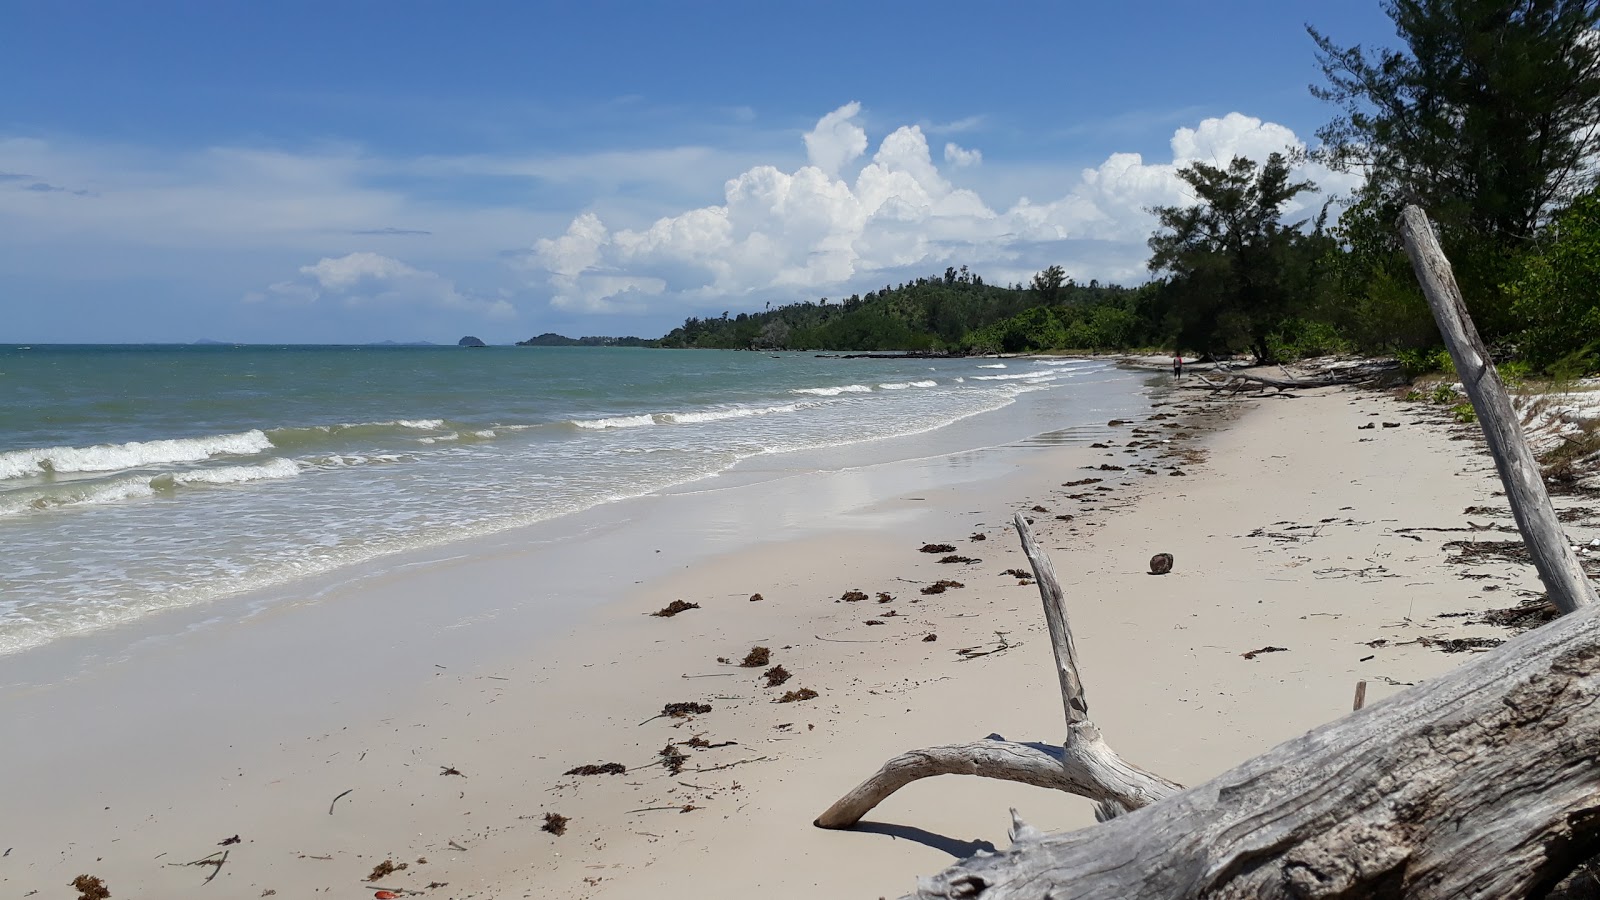 Foto de Tegar Putri Beach ubicado en área natural